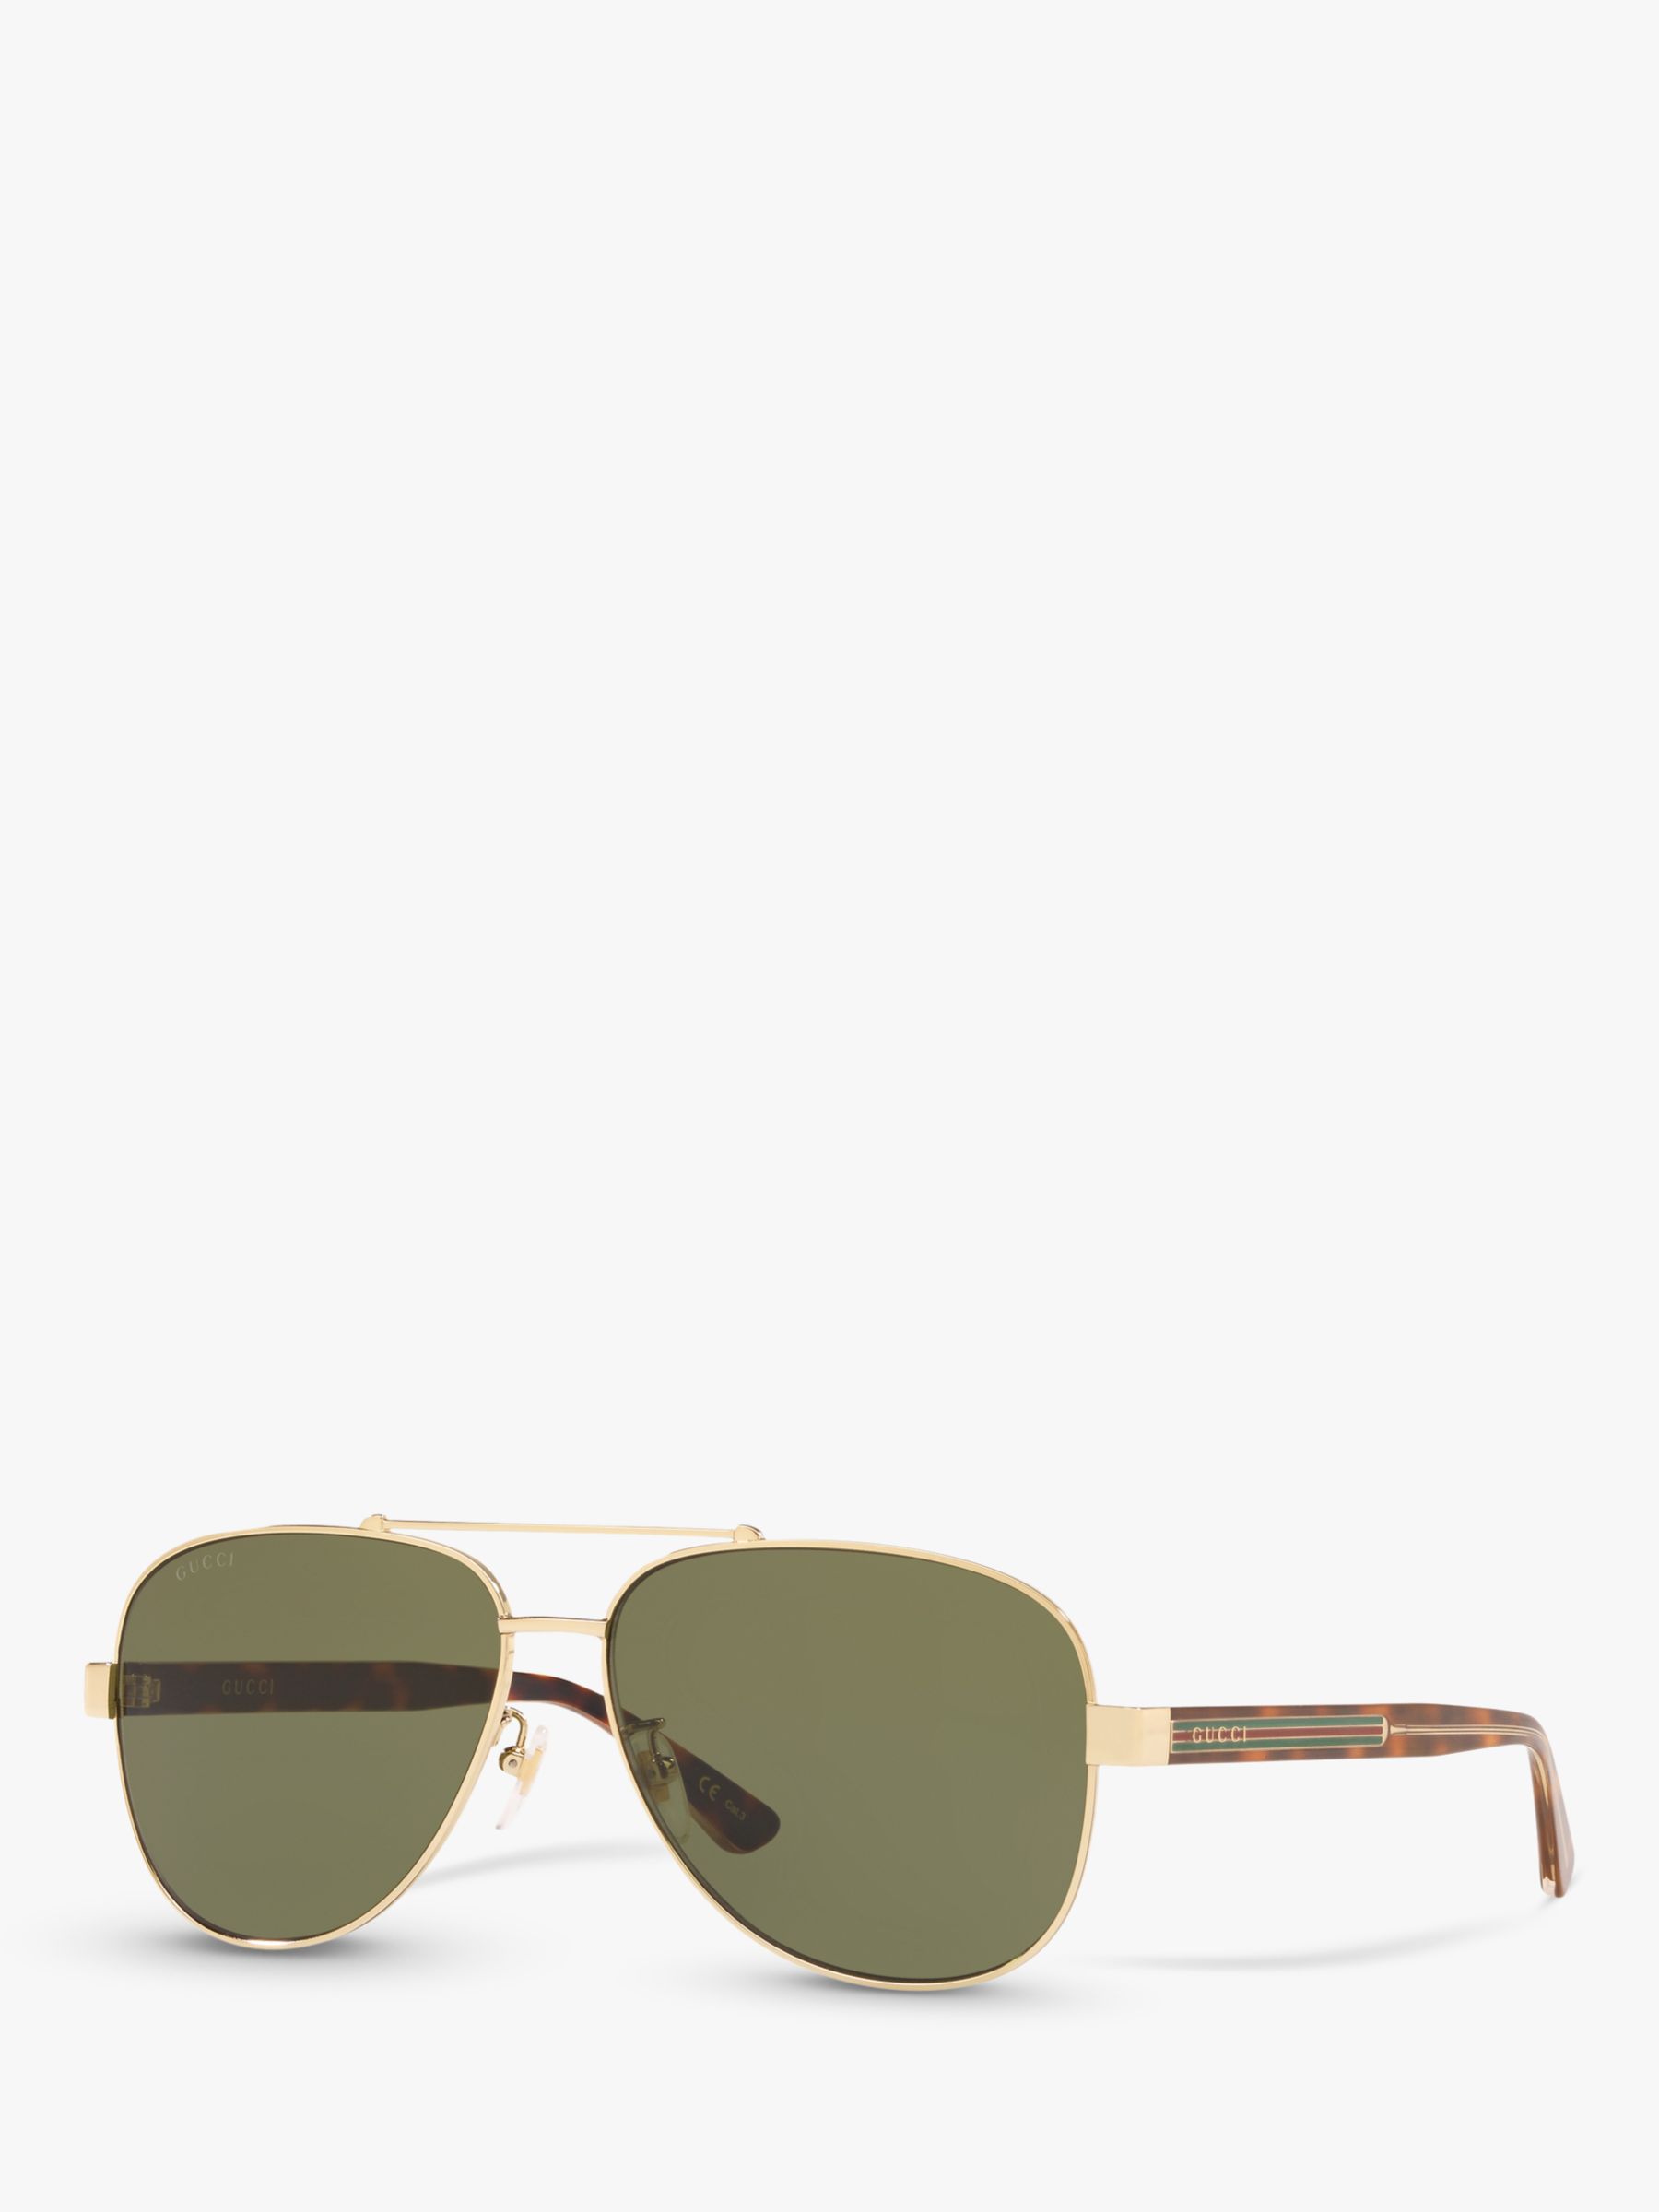 Gucci GC001244 Men's Aviator Sunglasses, Gold/Green at John Lewis & Partners